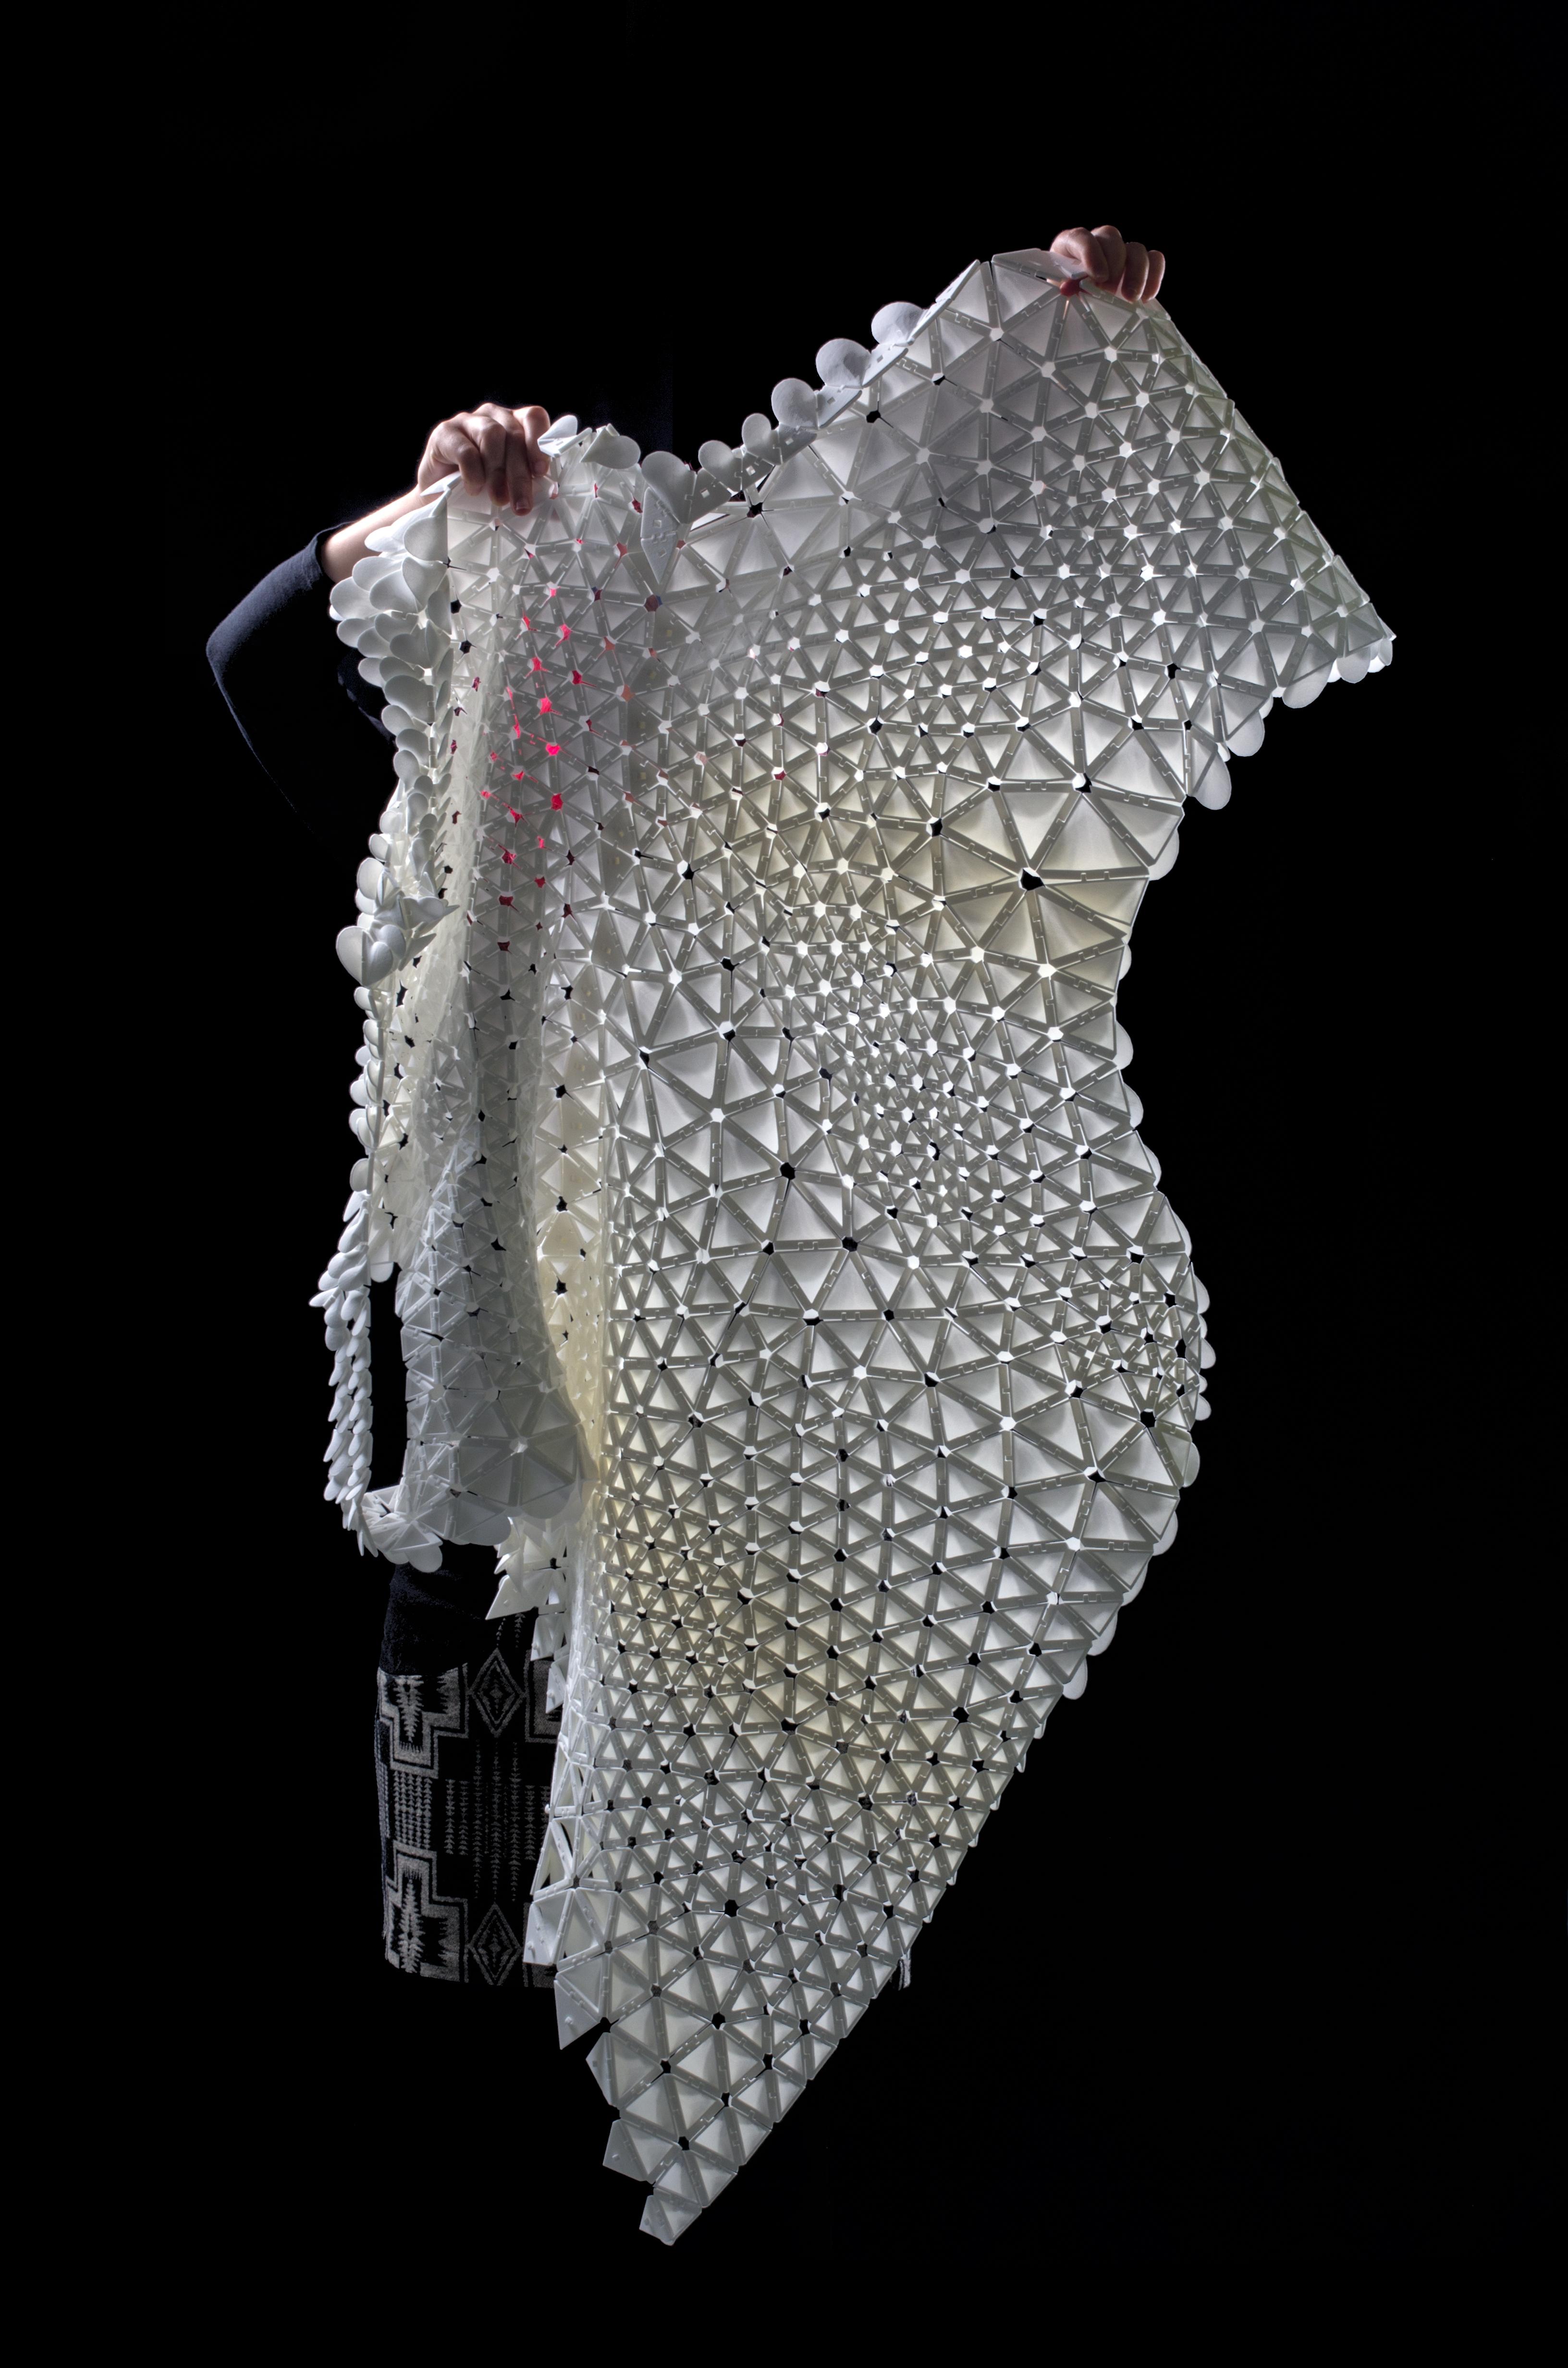 Nervous System Unveils New 3D Printed Kinematics Petal Dress | 3DPrint